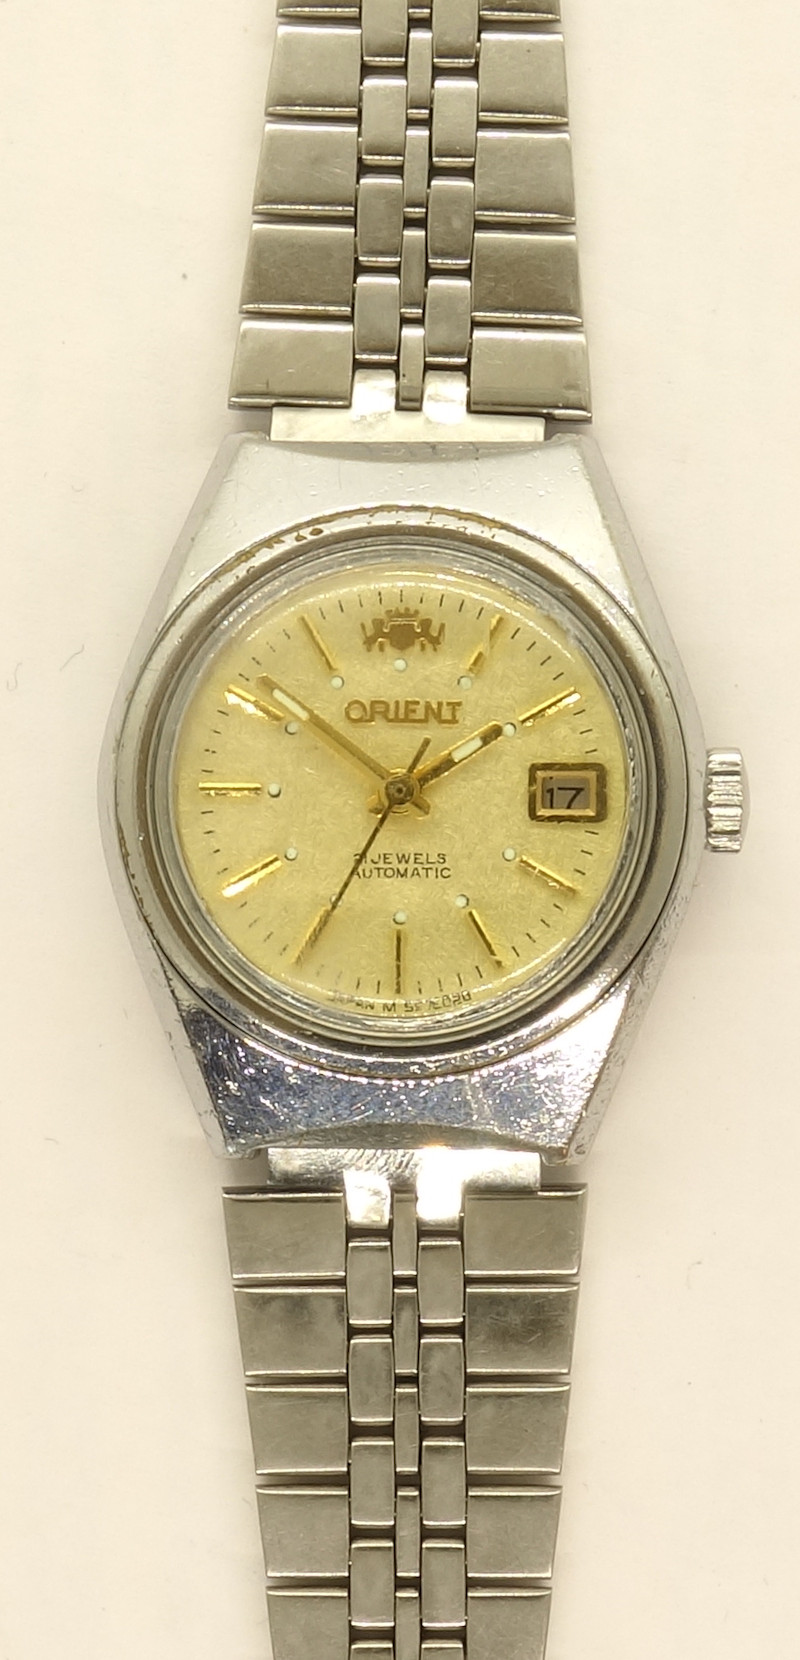 Orient Automatic ladies' watch